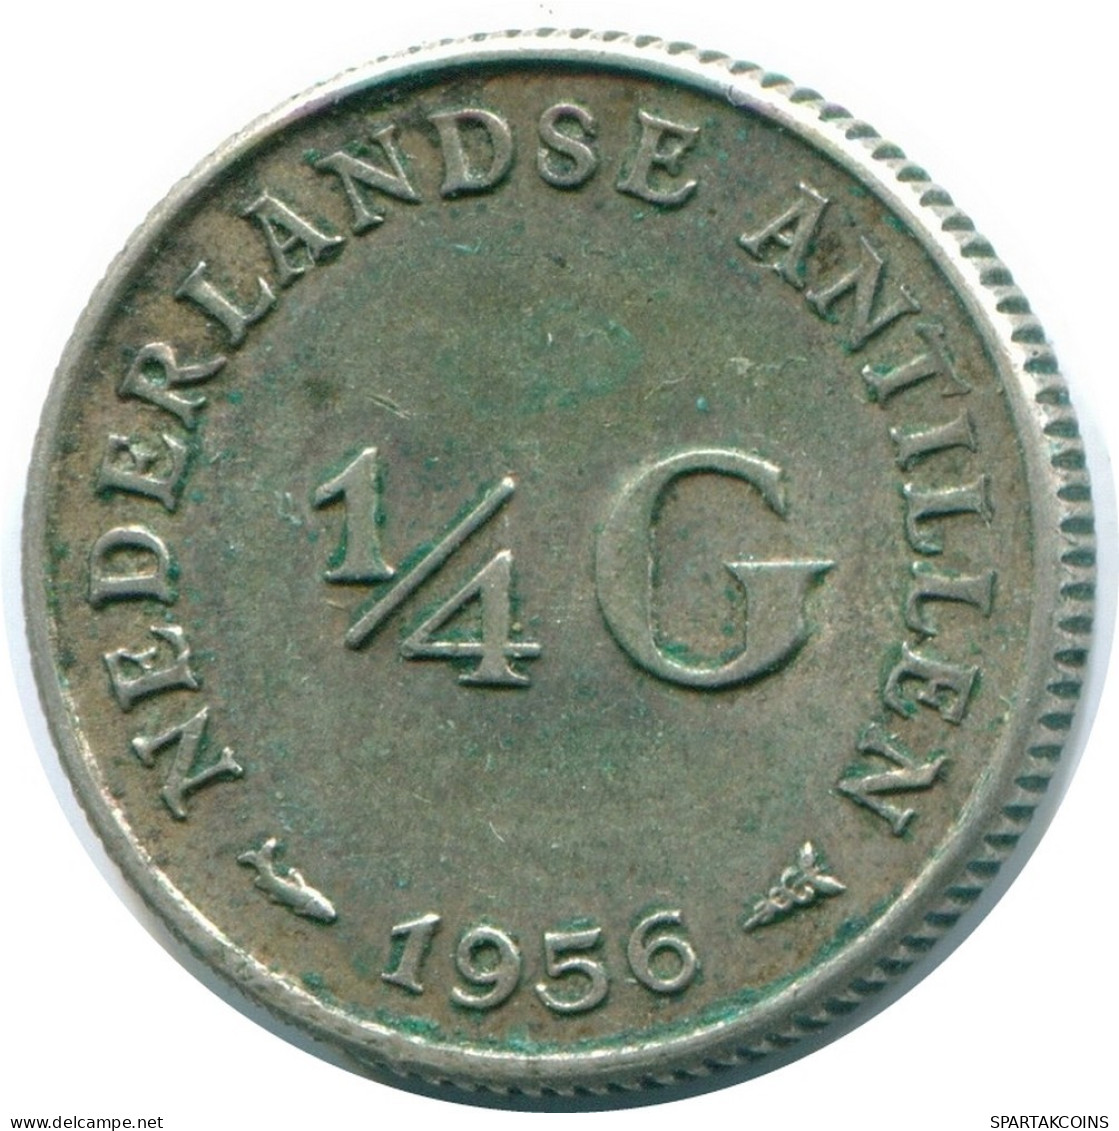 1/4 GULDEN 1956 NETHERLANDS ANTILLES SILVER Colonial Coin #NL10939.4.U.A - Netherlands Antilles